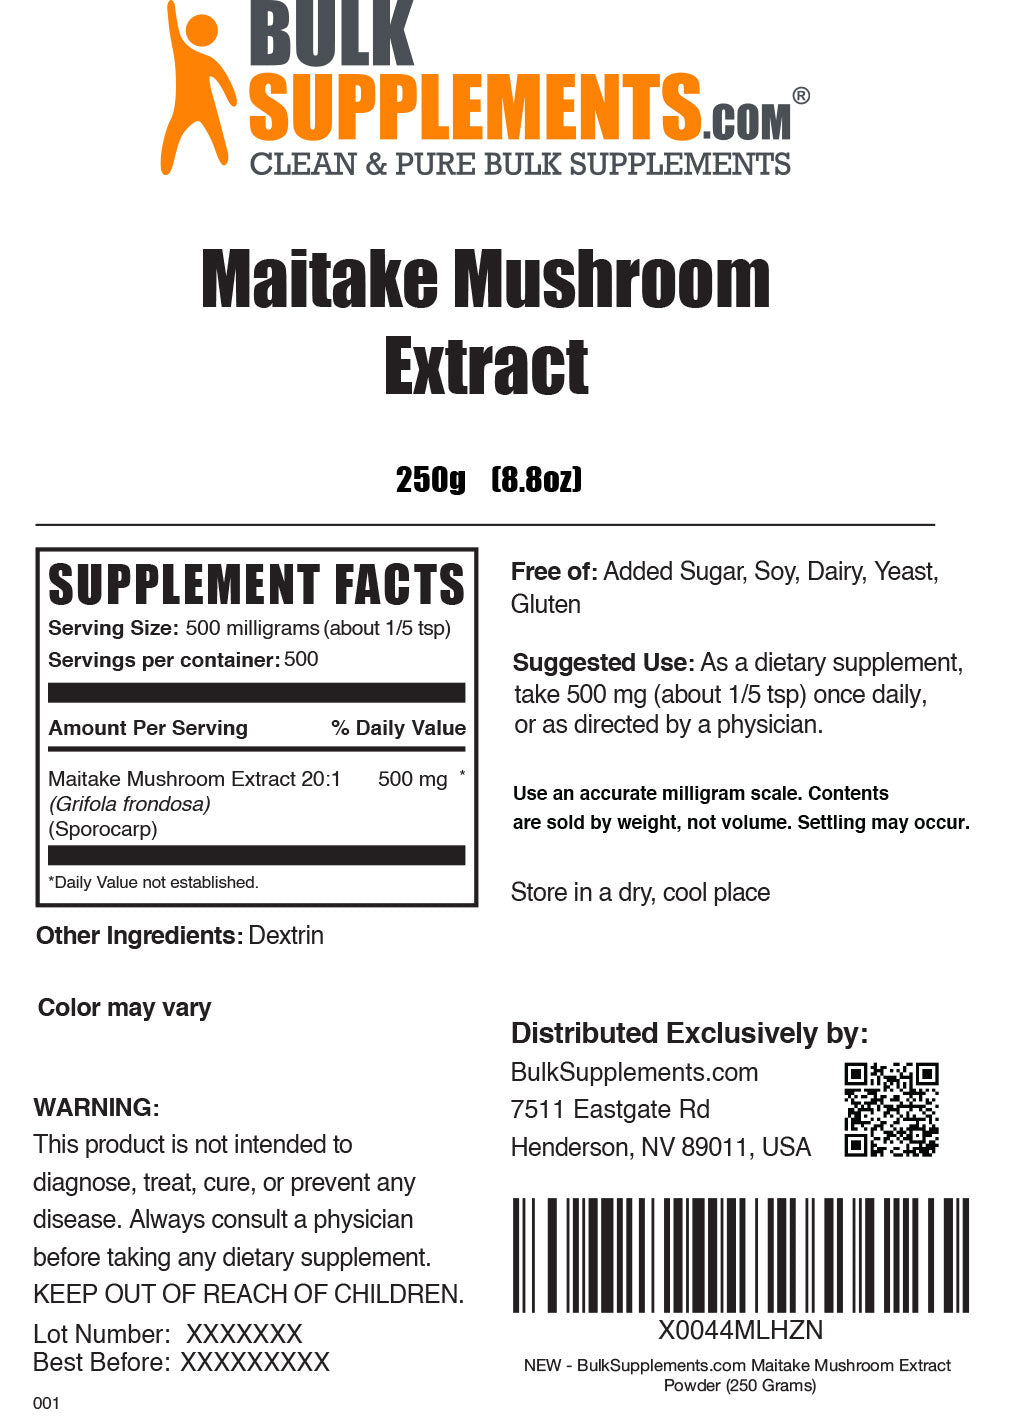 Maitake Mushroom Extract Powder Label 250g